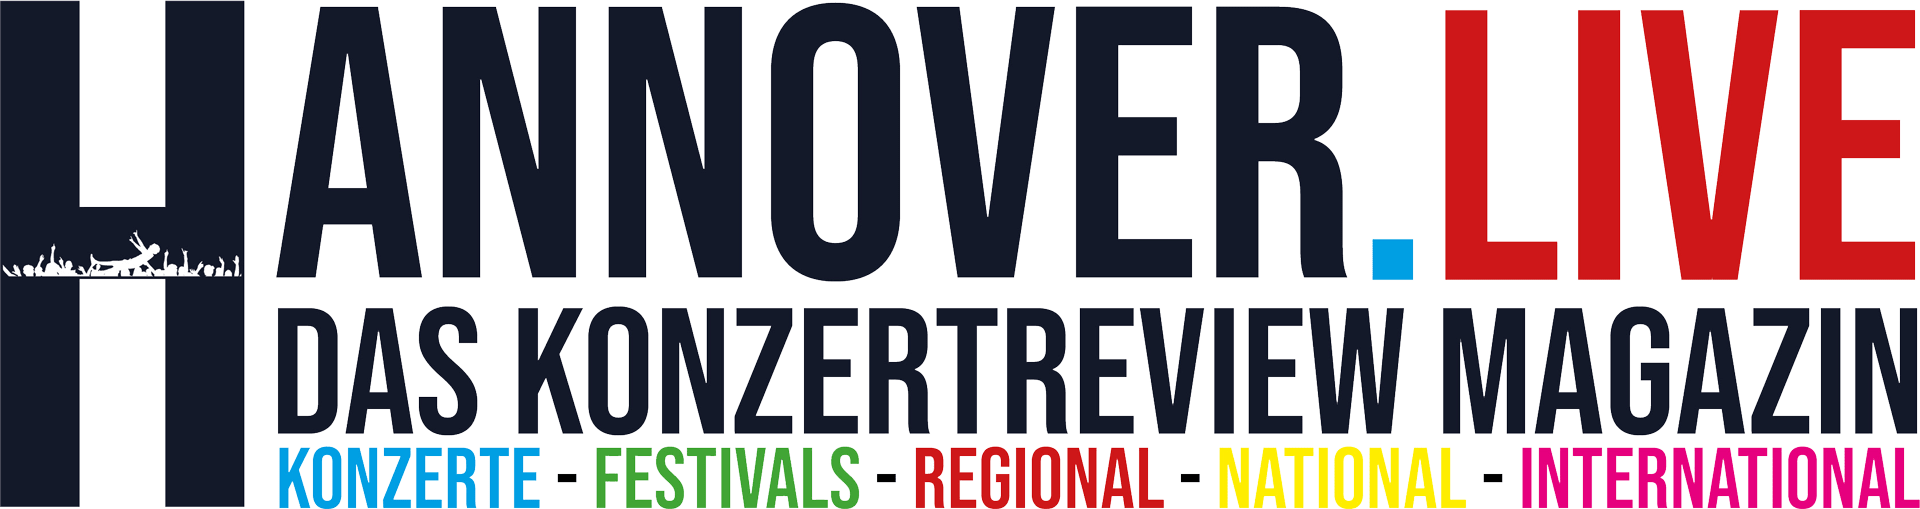 Hannover.LIVE - Das KonzertReview Magazin